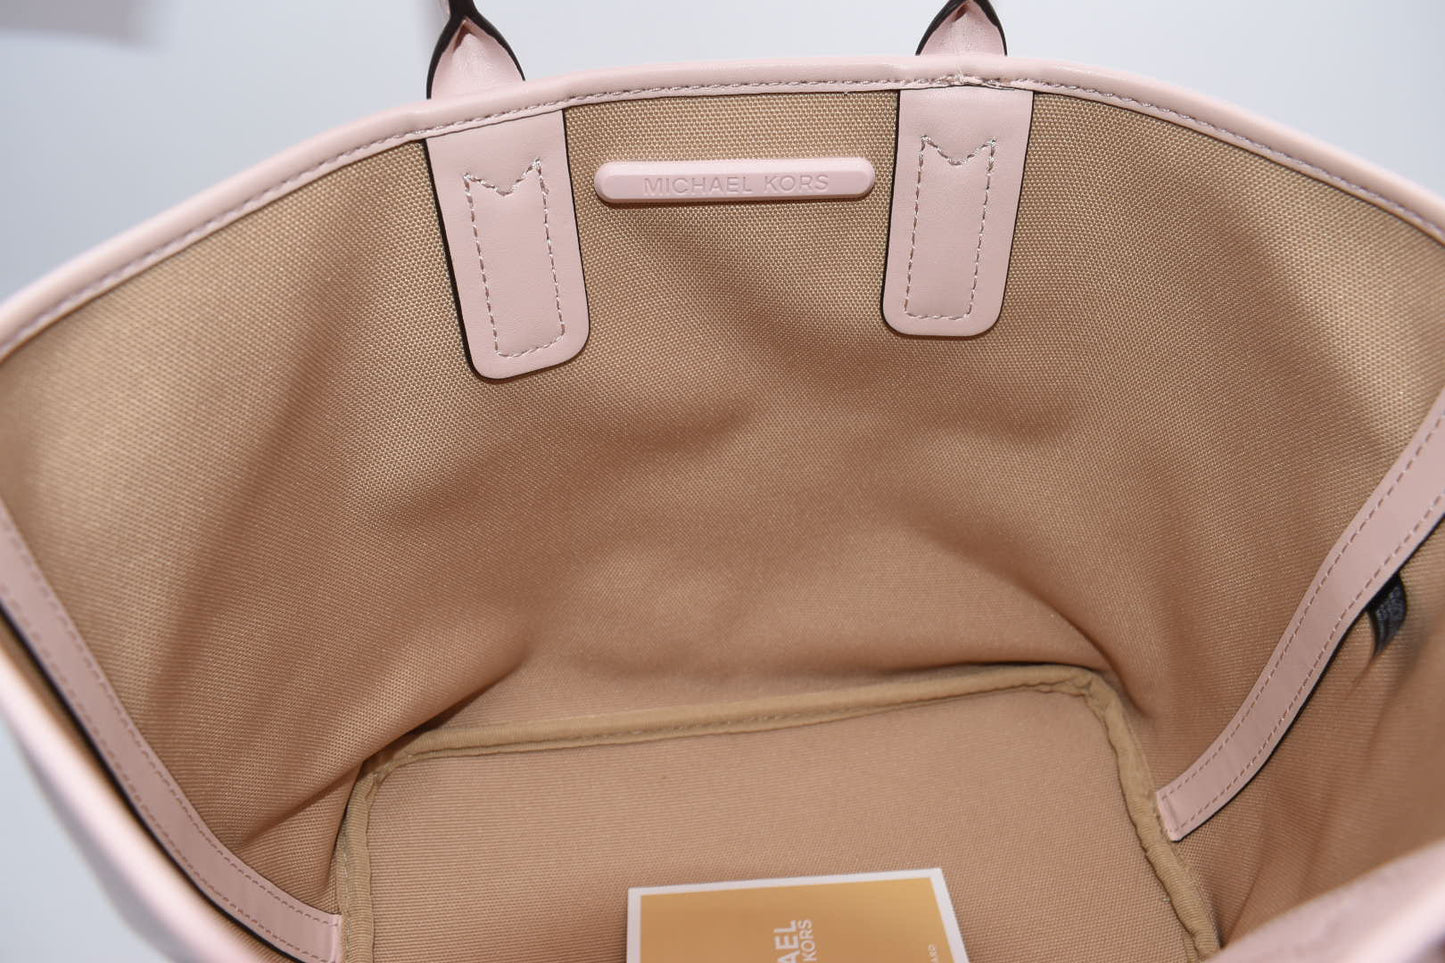 Michael Kors Jodie Small Logo Jacquard Tote Bag in Powder Blush